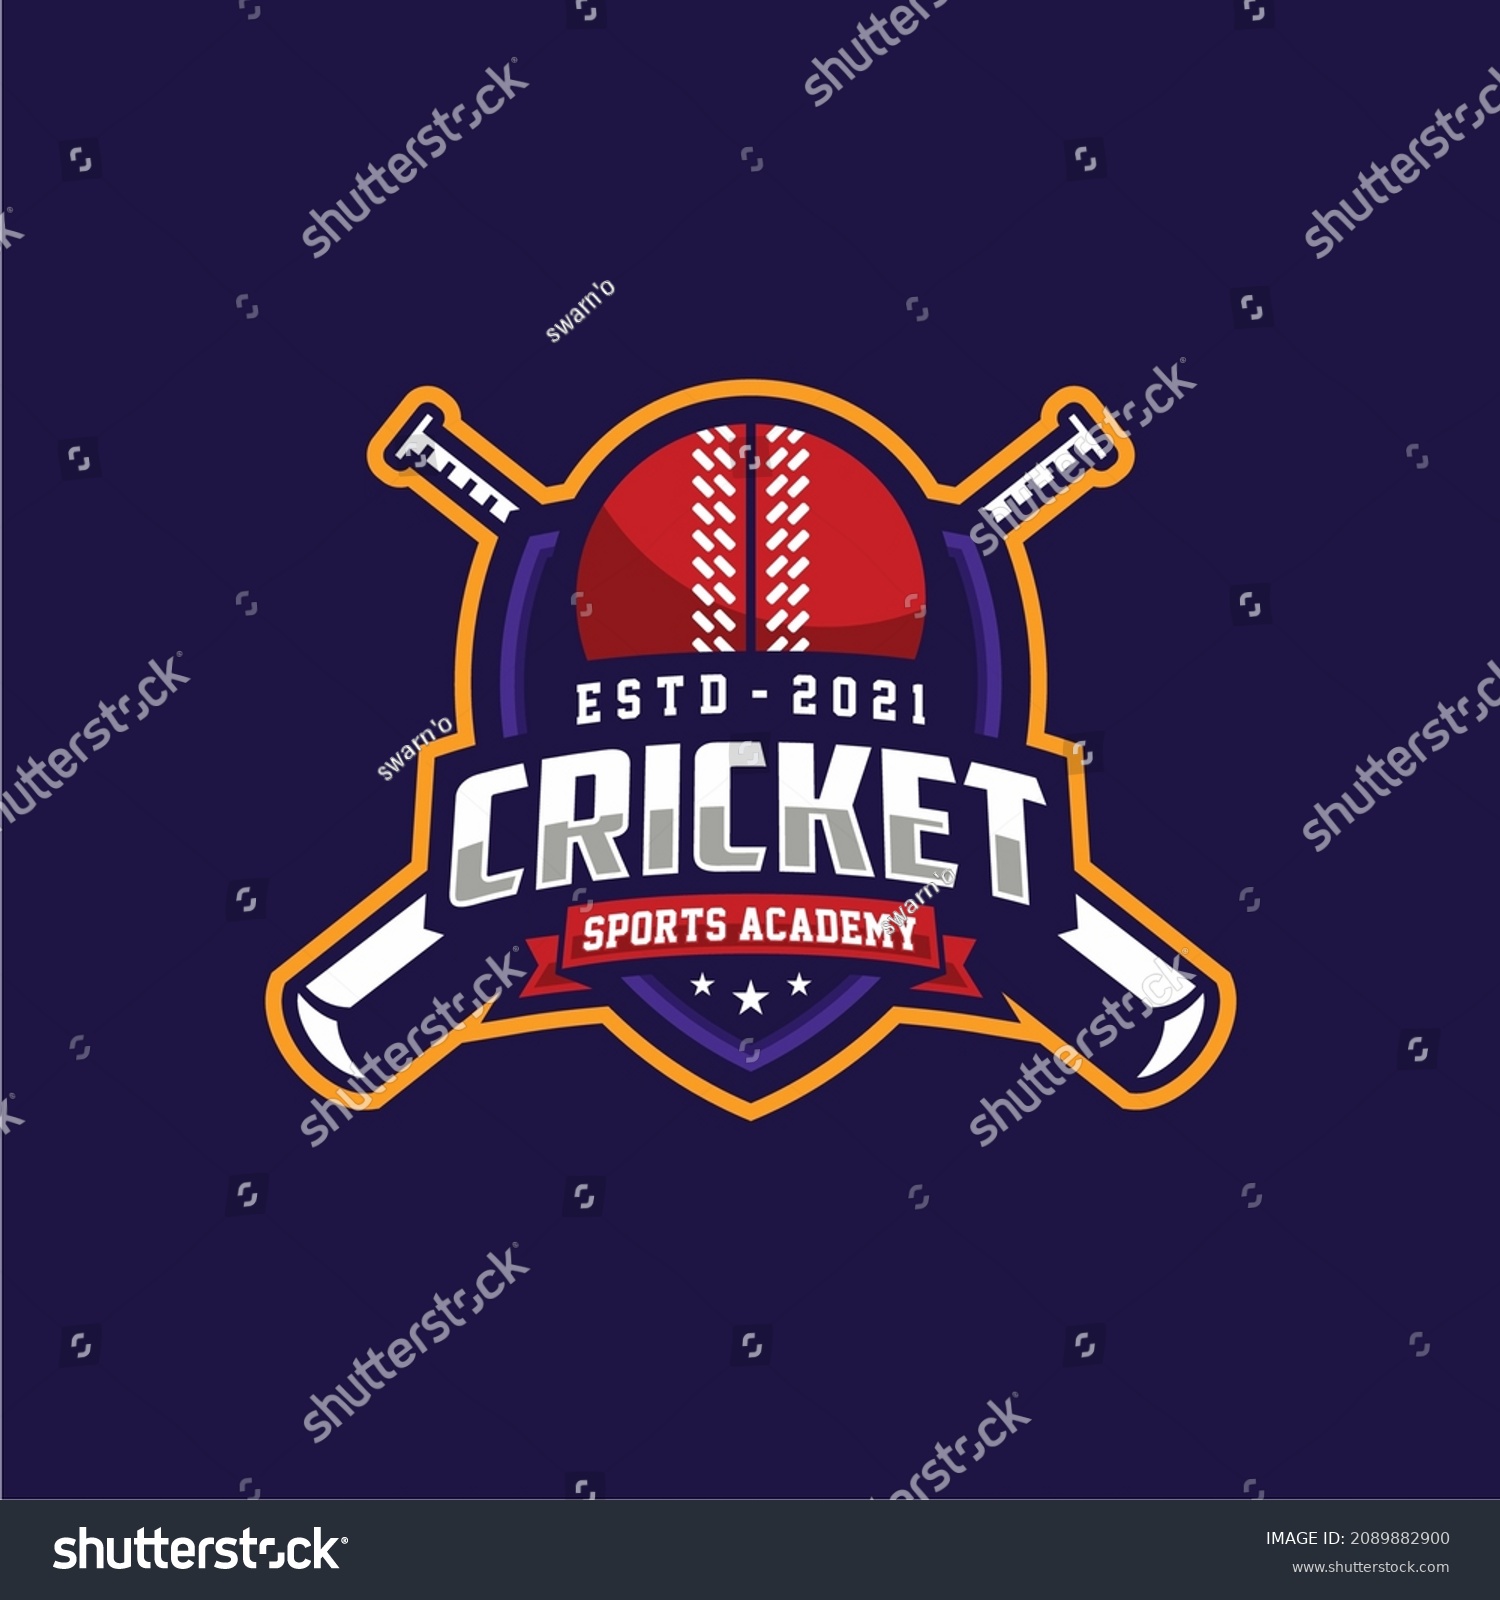 9,358 Cricket logo Images, Stock Photos & Vectors | Shutterstock